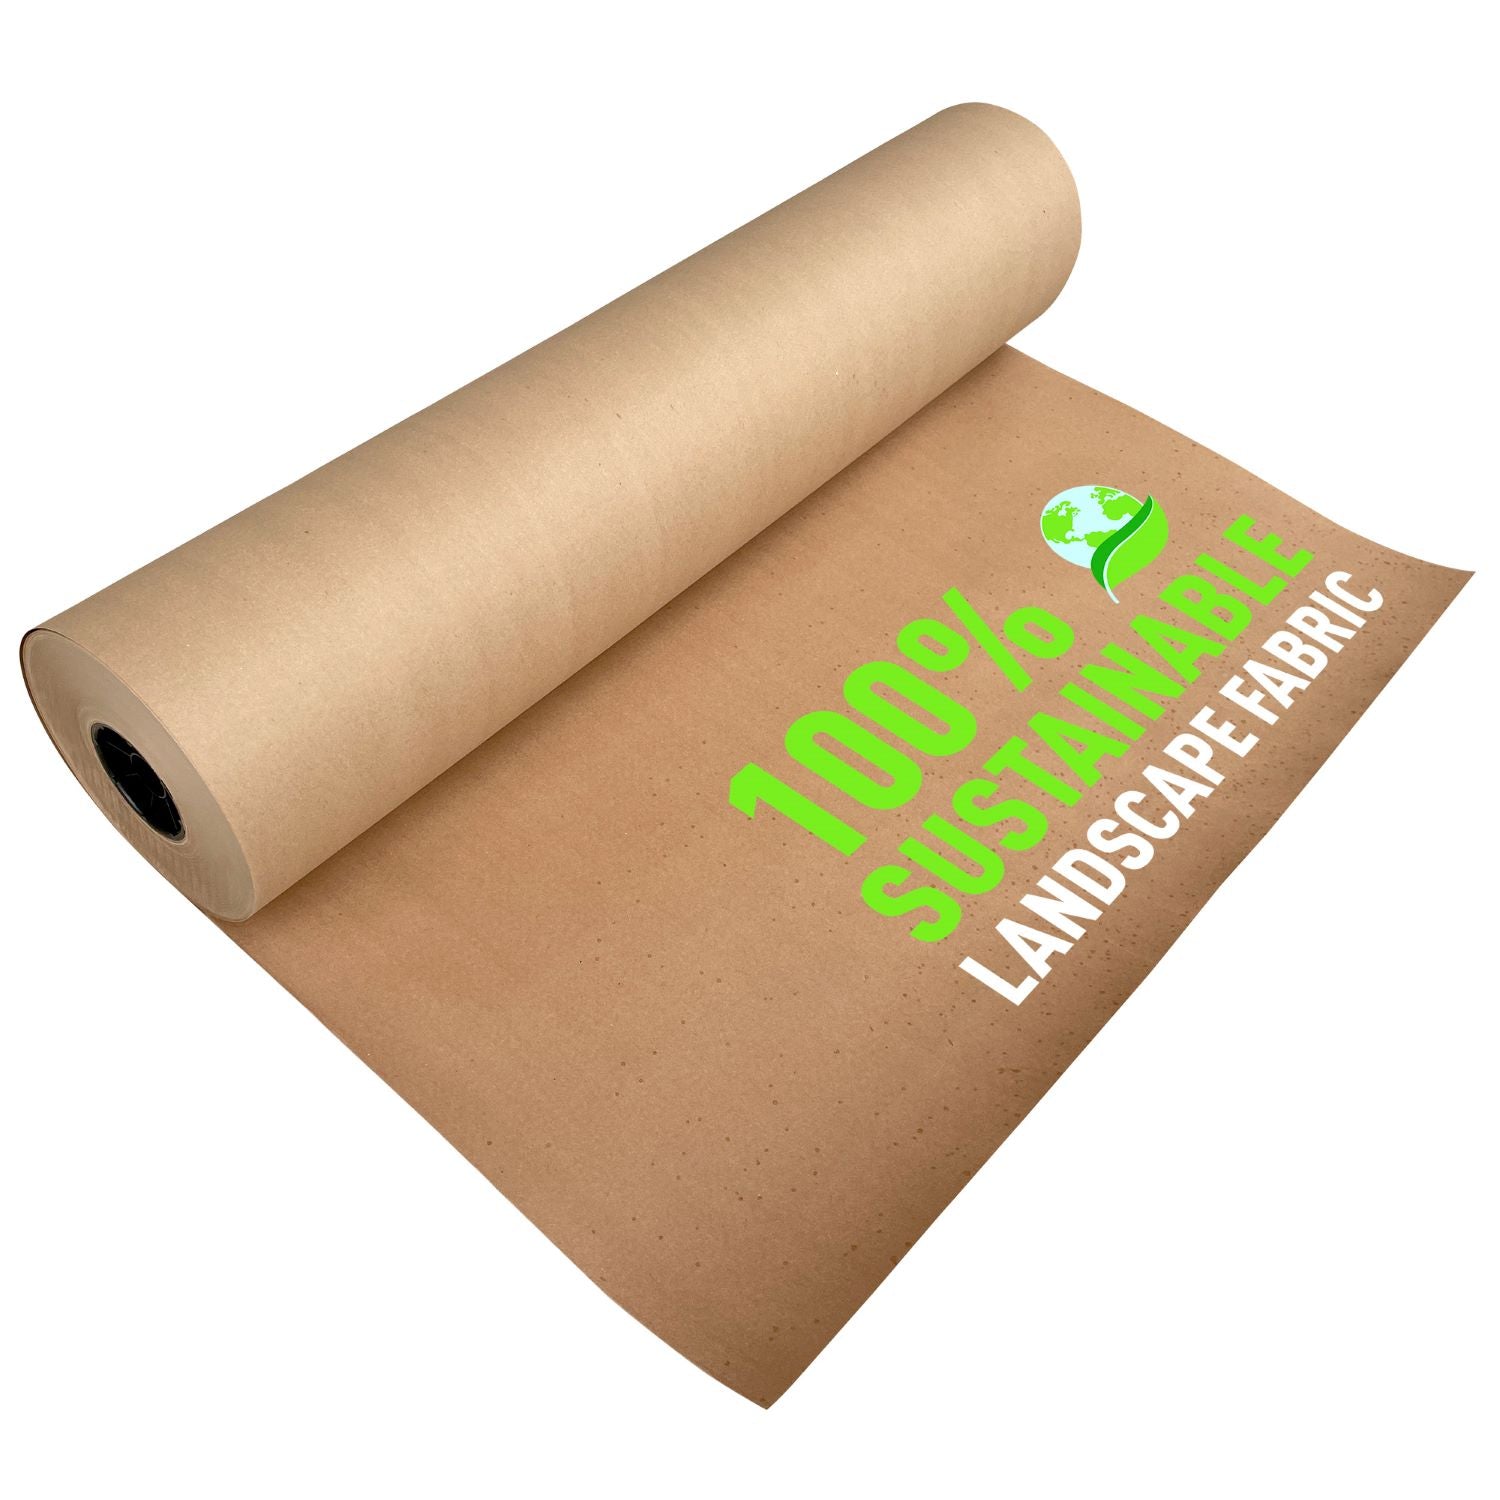 Biodegradable Landscape Fabric - Garden Paper Rolls For Weeds – Sandbaggy